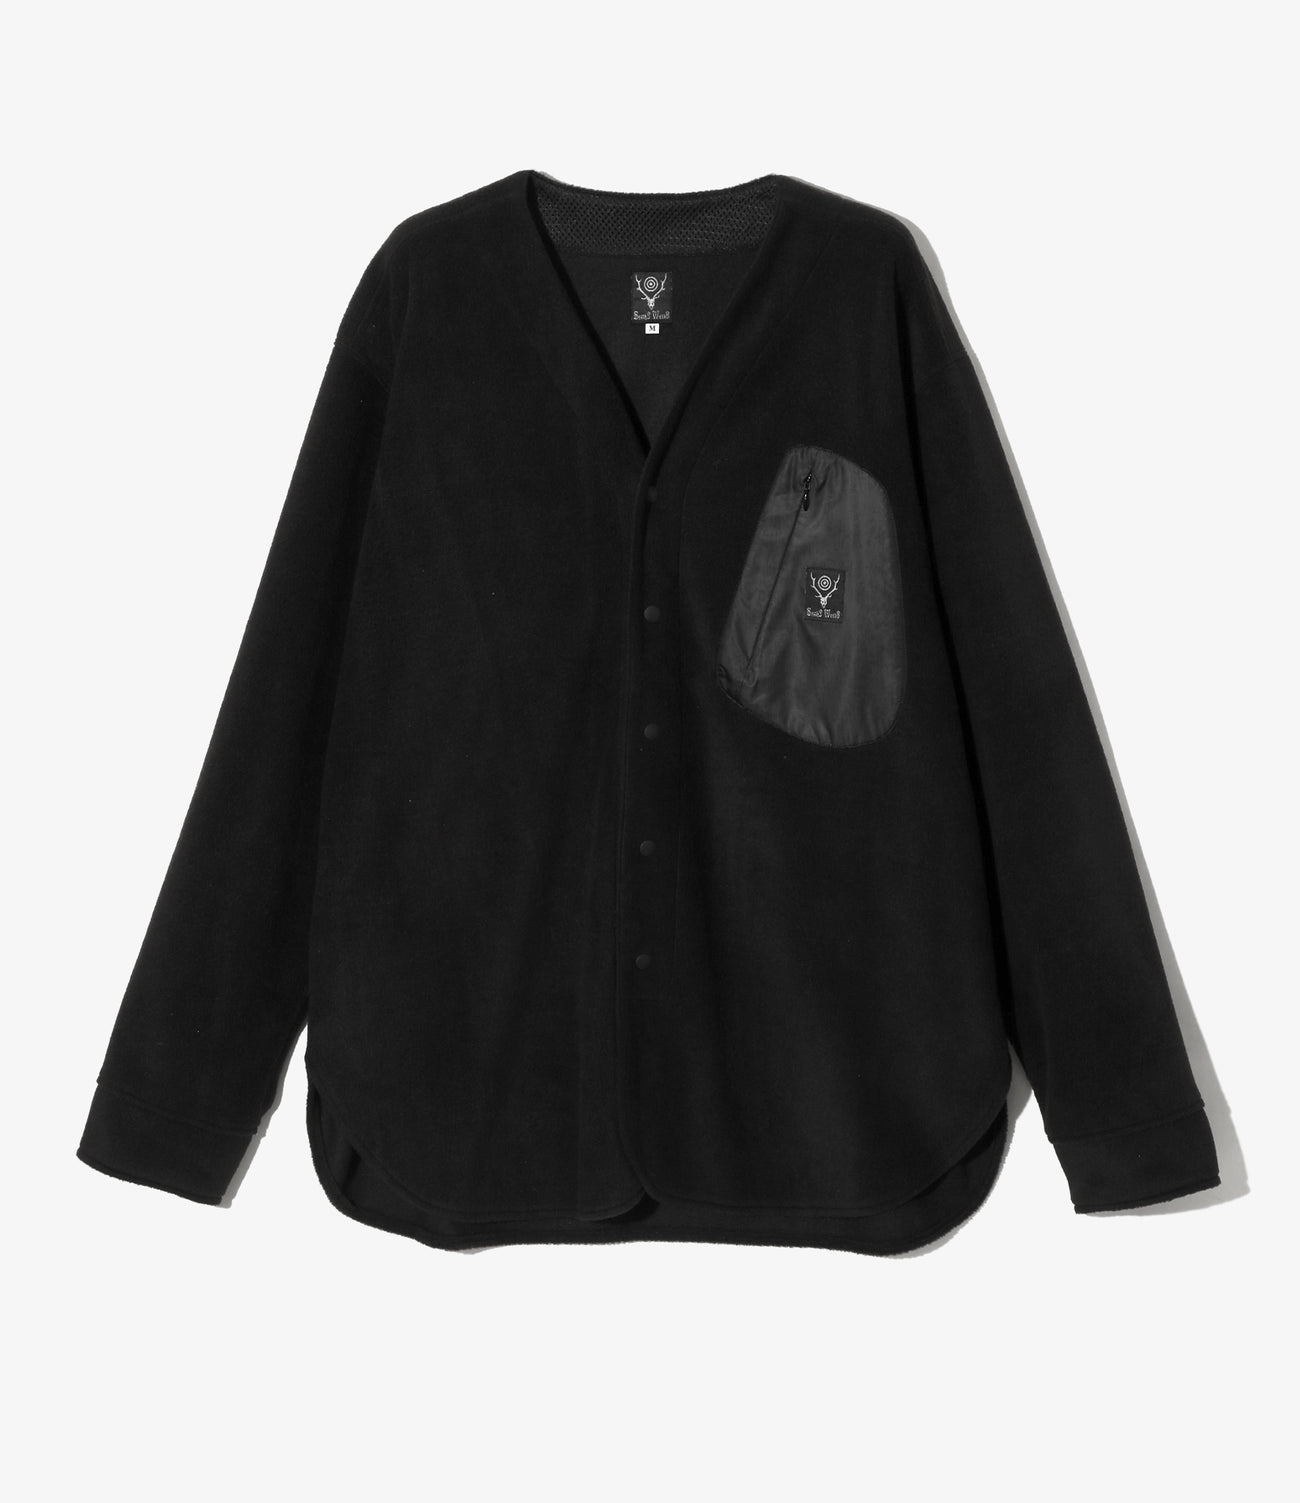 Scouting Shirt - Black - Poly Fleece